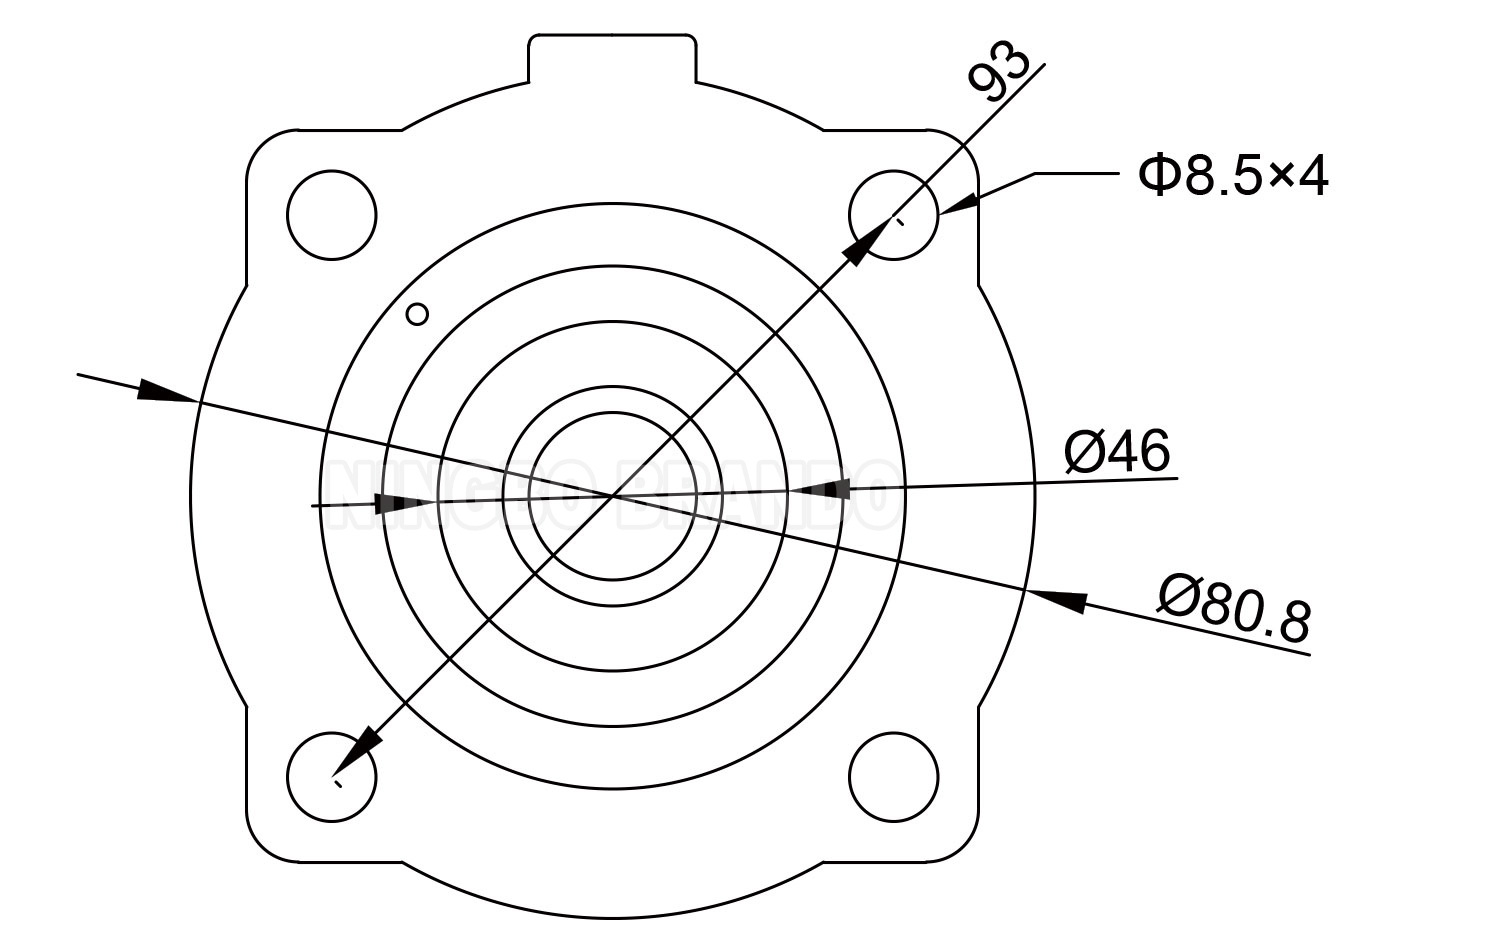 K2546 shockwave diaphragm for gust collector pulse jet valve repair kit kit 0